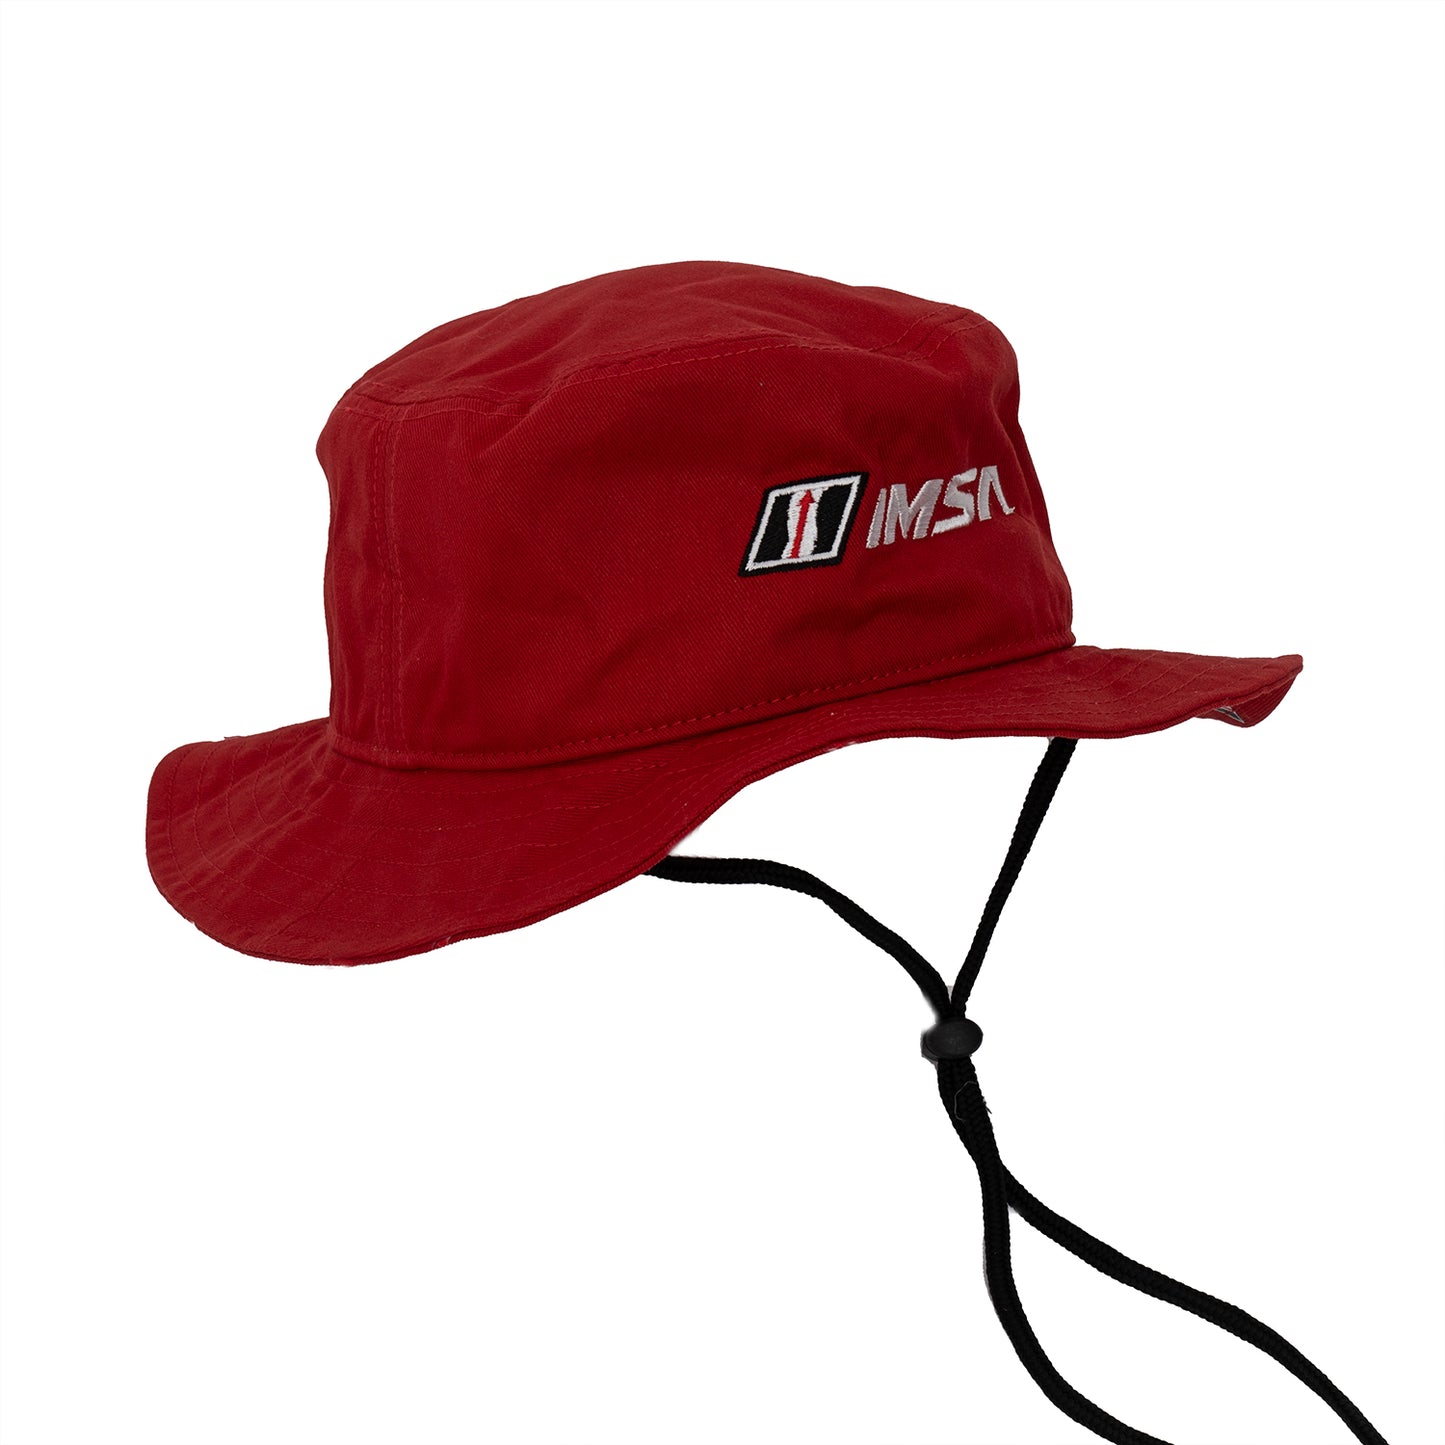 IMSA Bucket Hat - Red